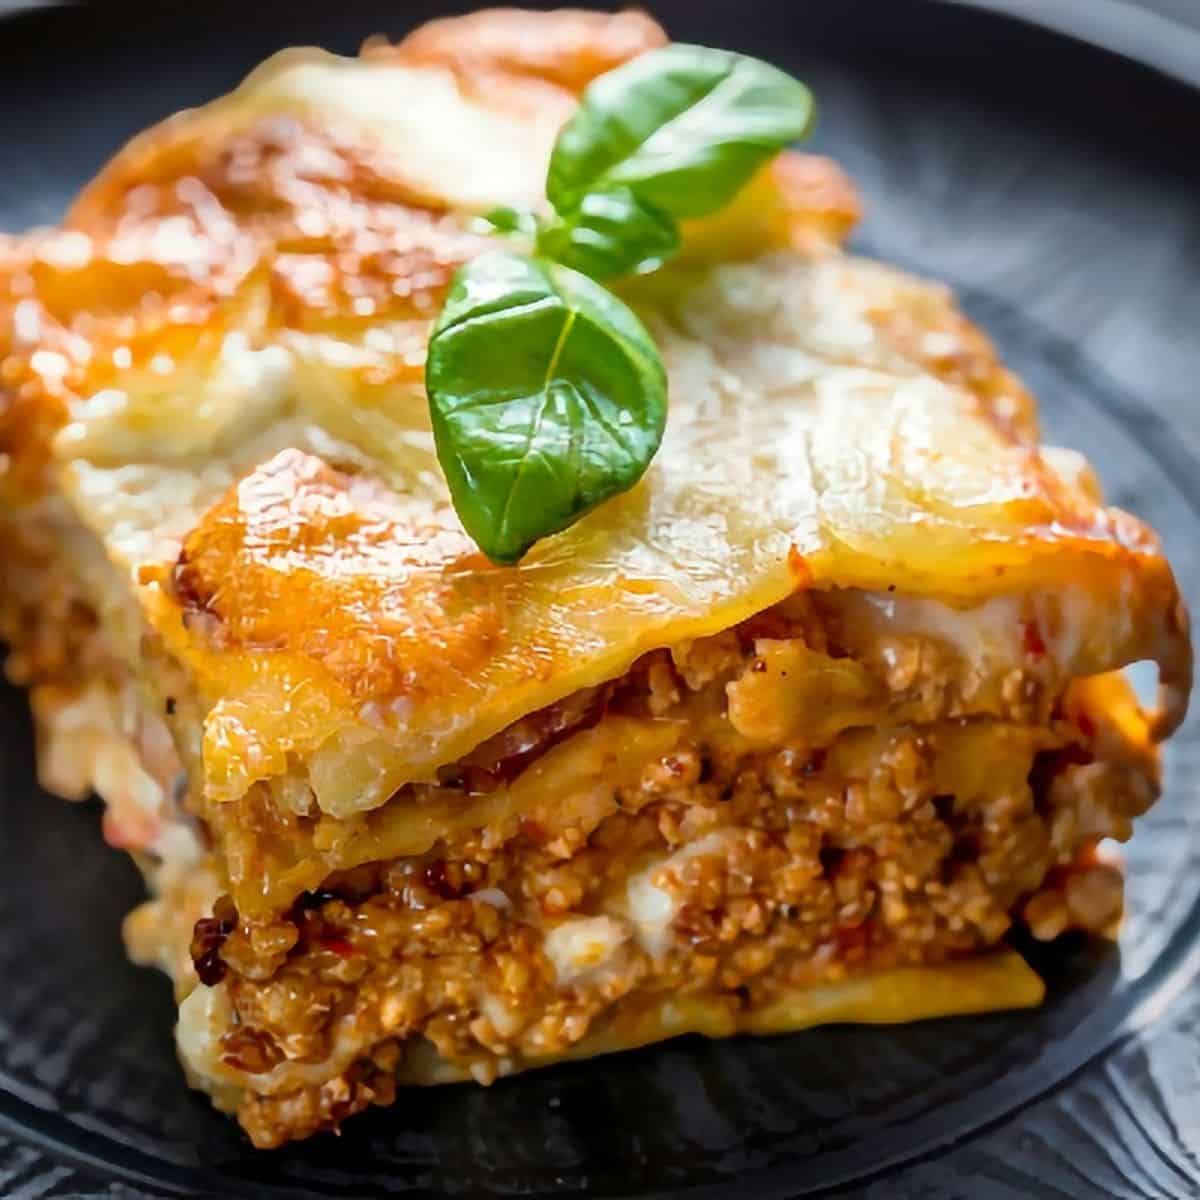 2. Parmesan Lasagna - recipe for Italian casseroles